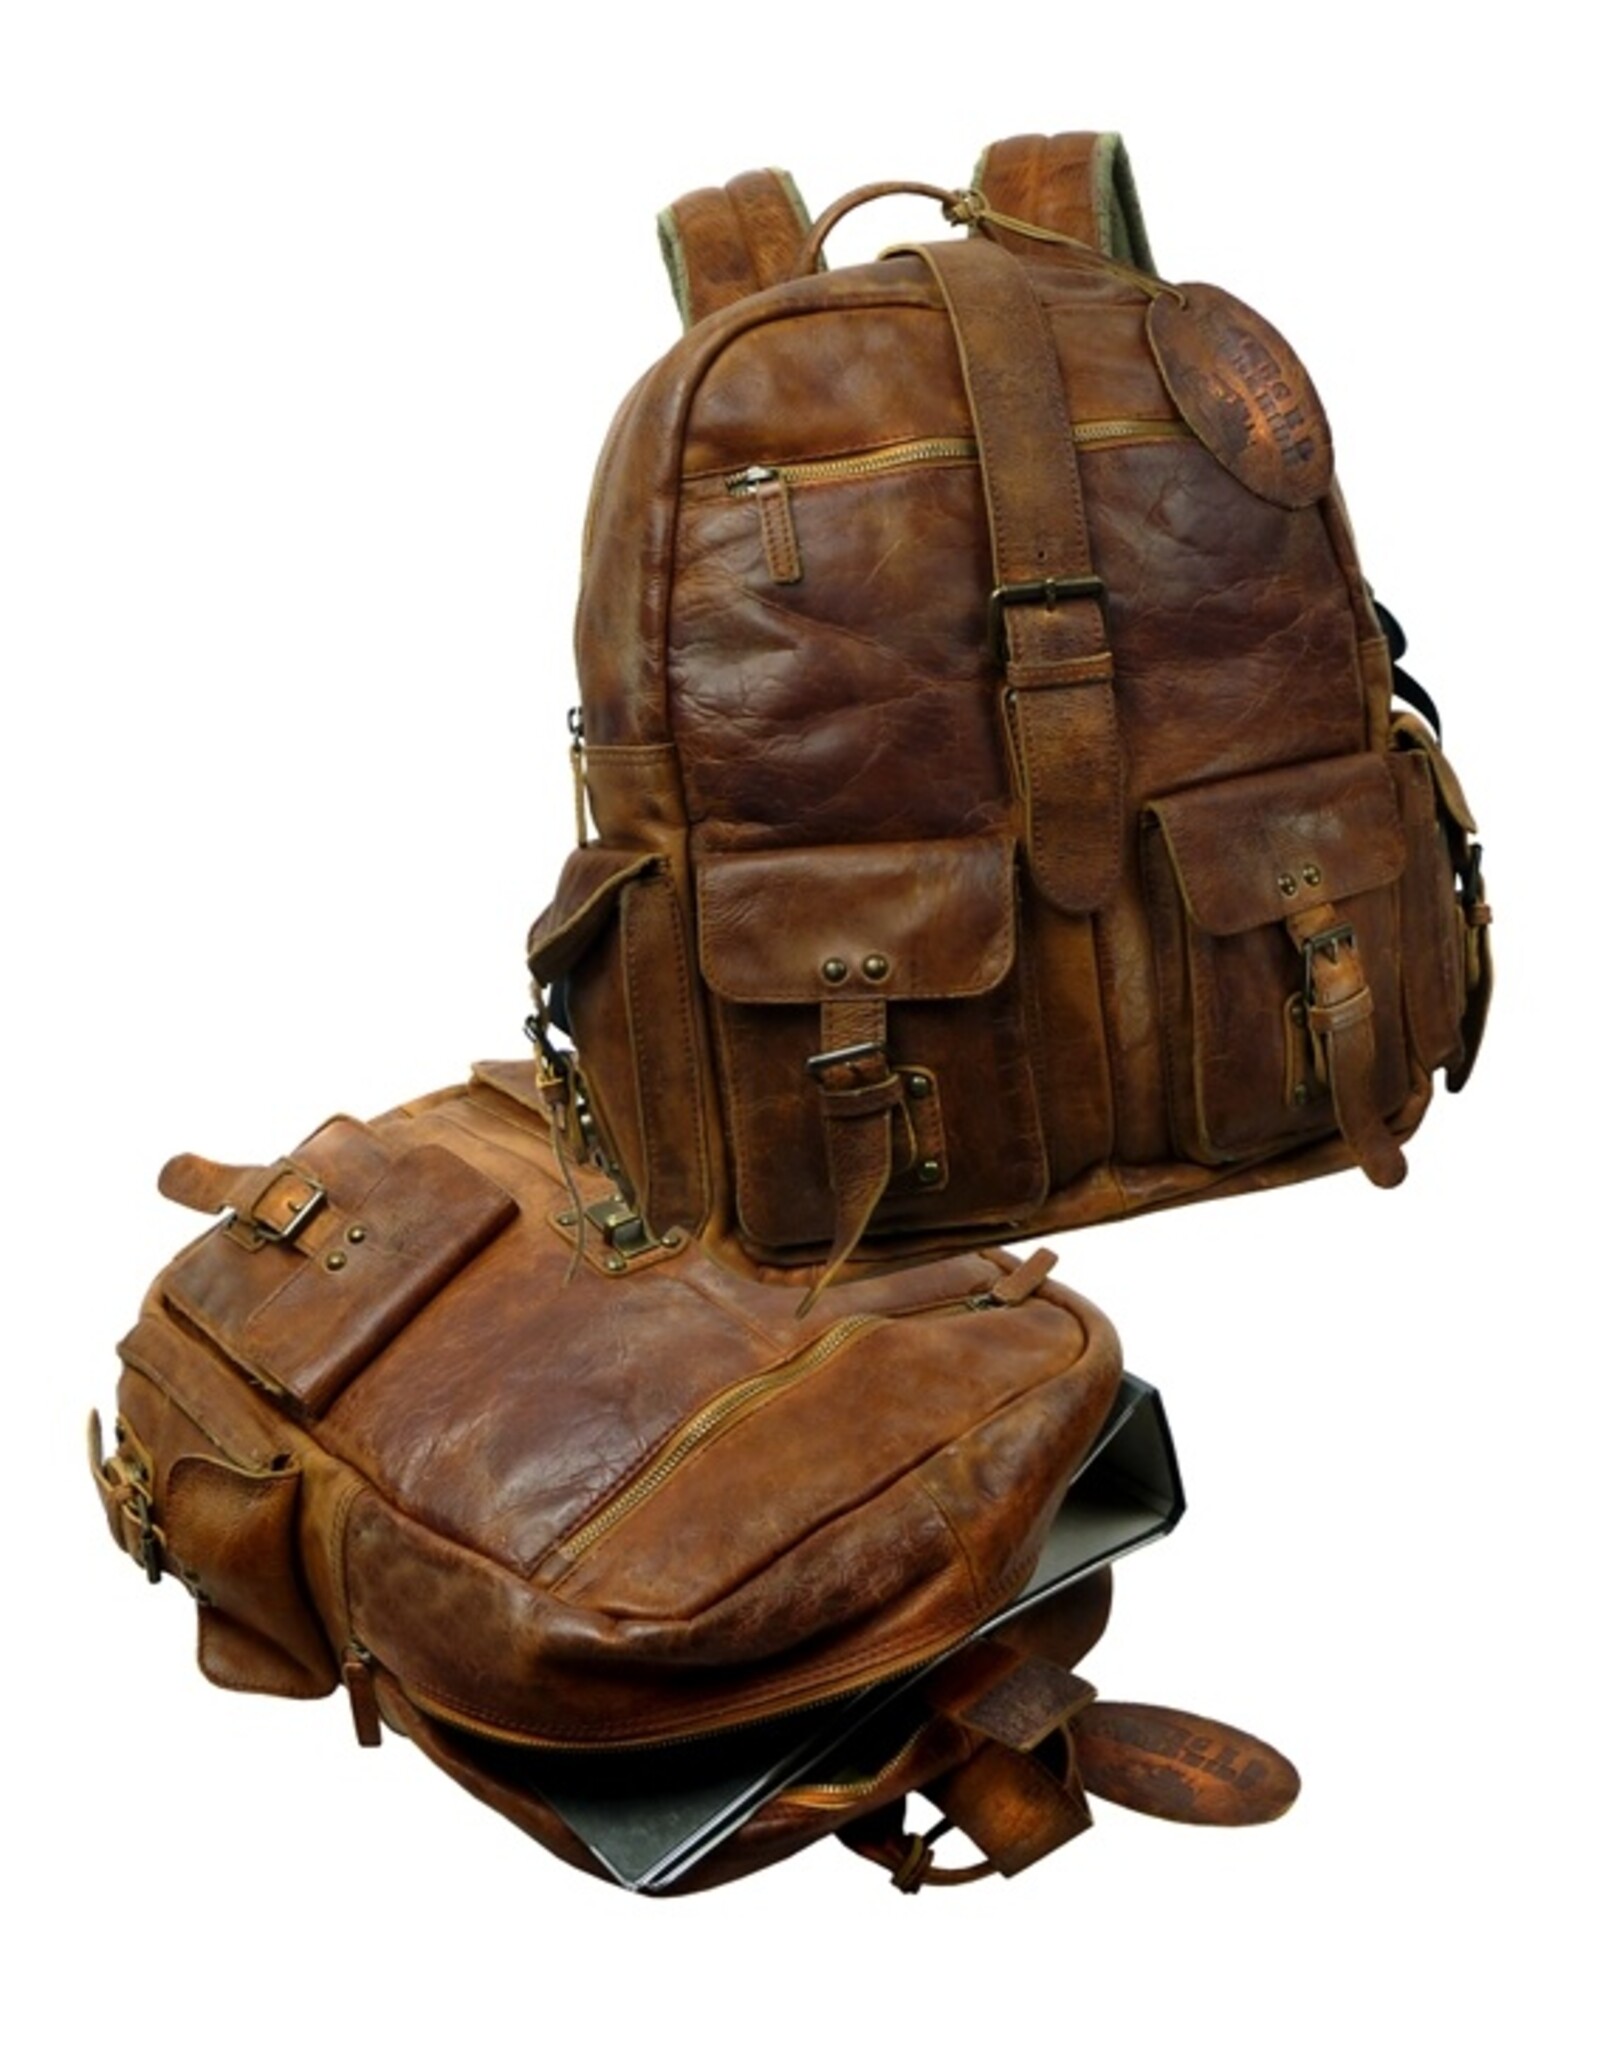 LandLeder Leather backpacks Leather shoppers - Leather Backpack JEROME XL Washed Leather